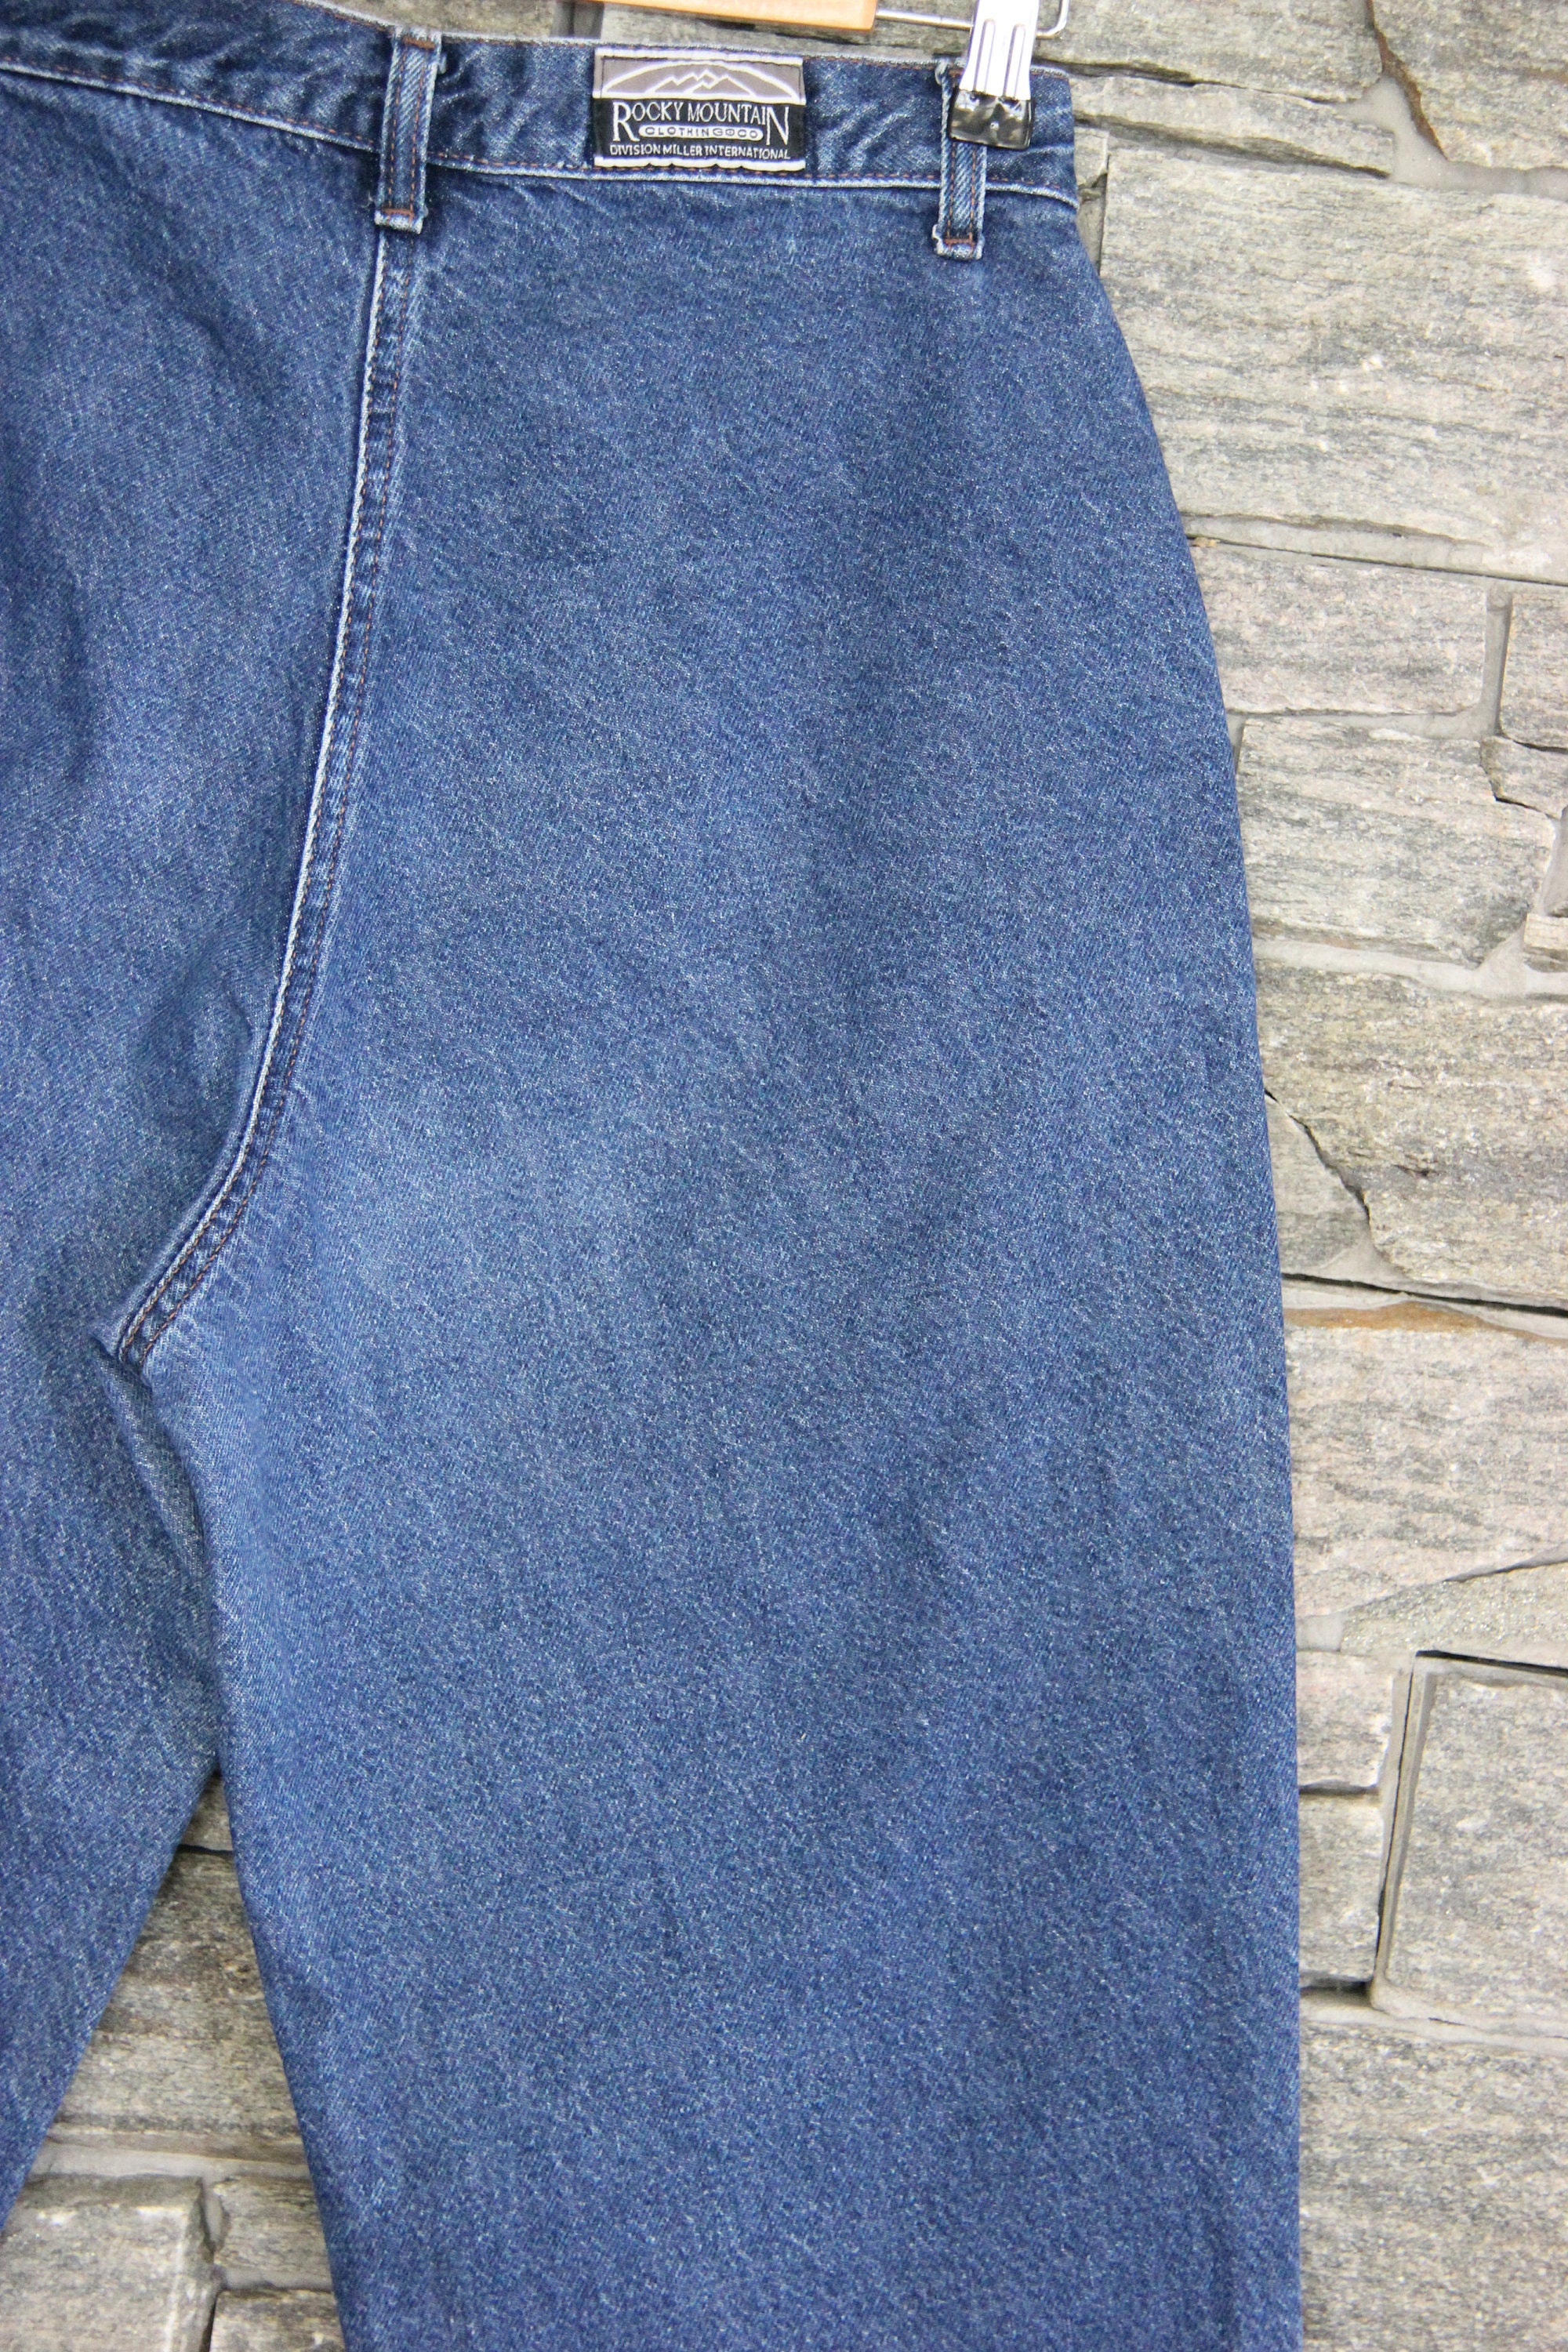 90s ROCKY MOUNTAIN Tapered Jeans 29 Waist Dark Wash Mom | Etsy